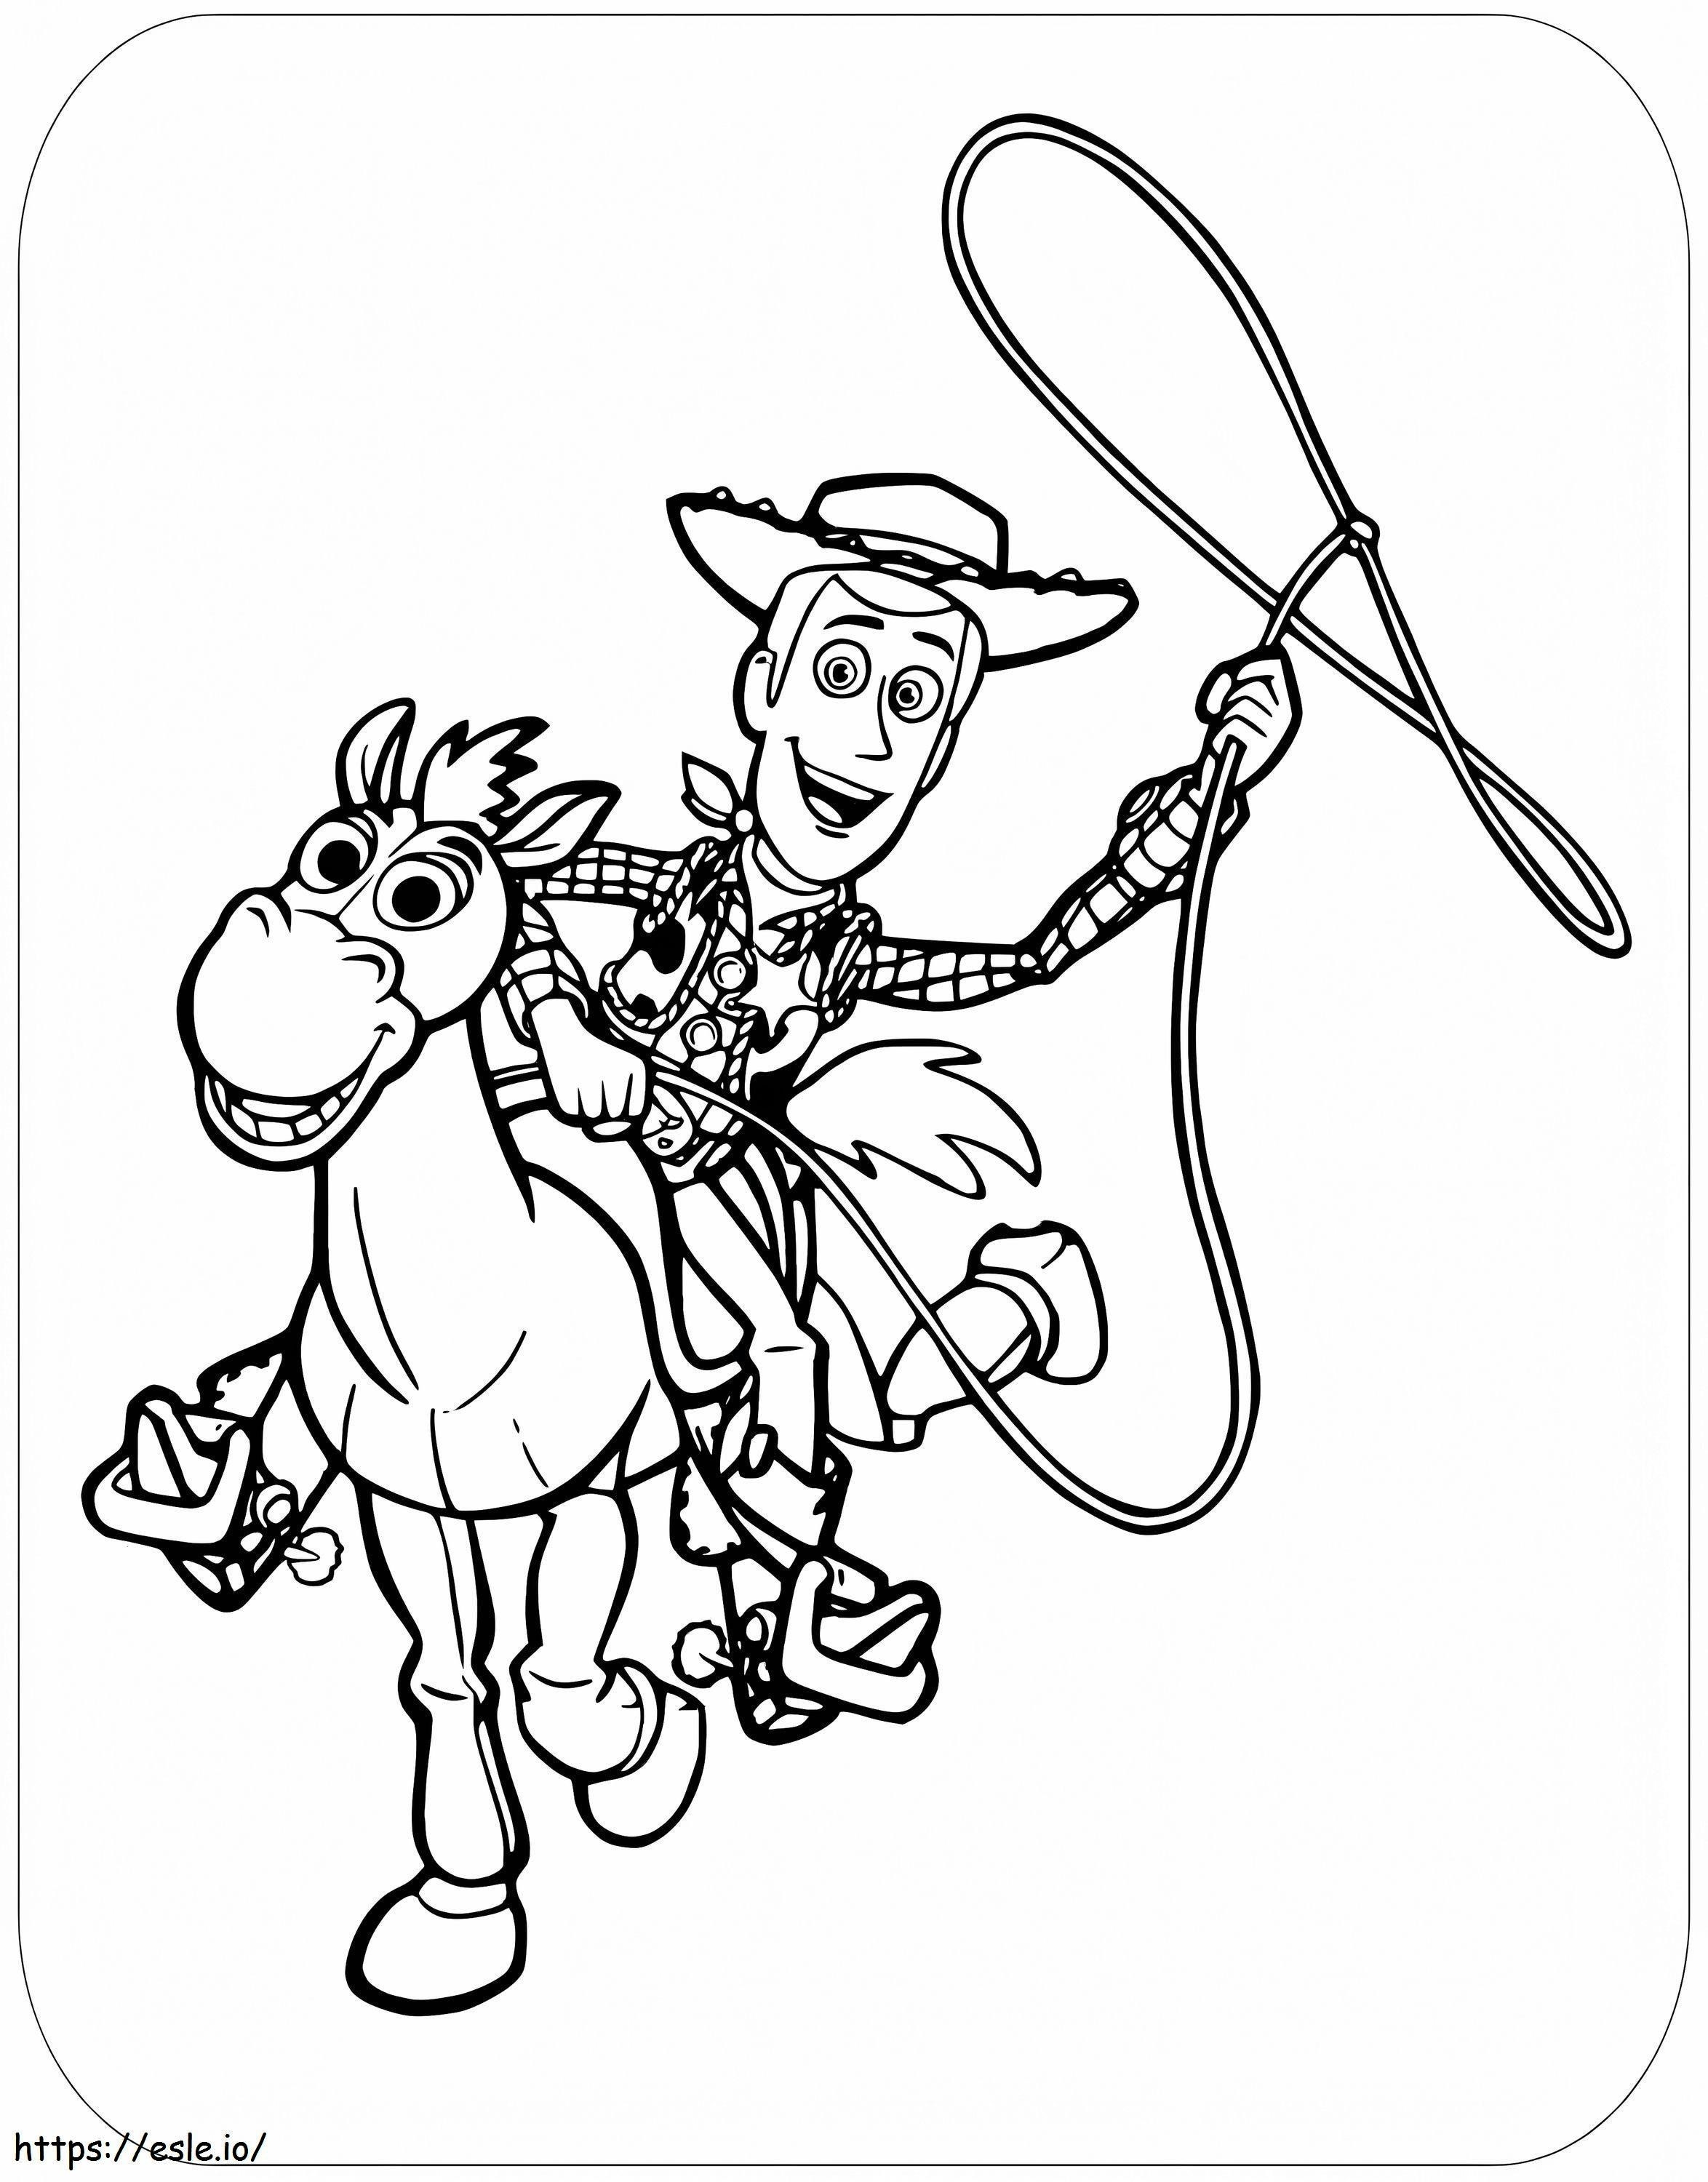 Woody Montando Bullseye 1 coloring page